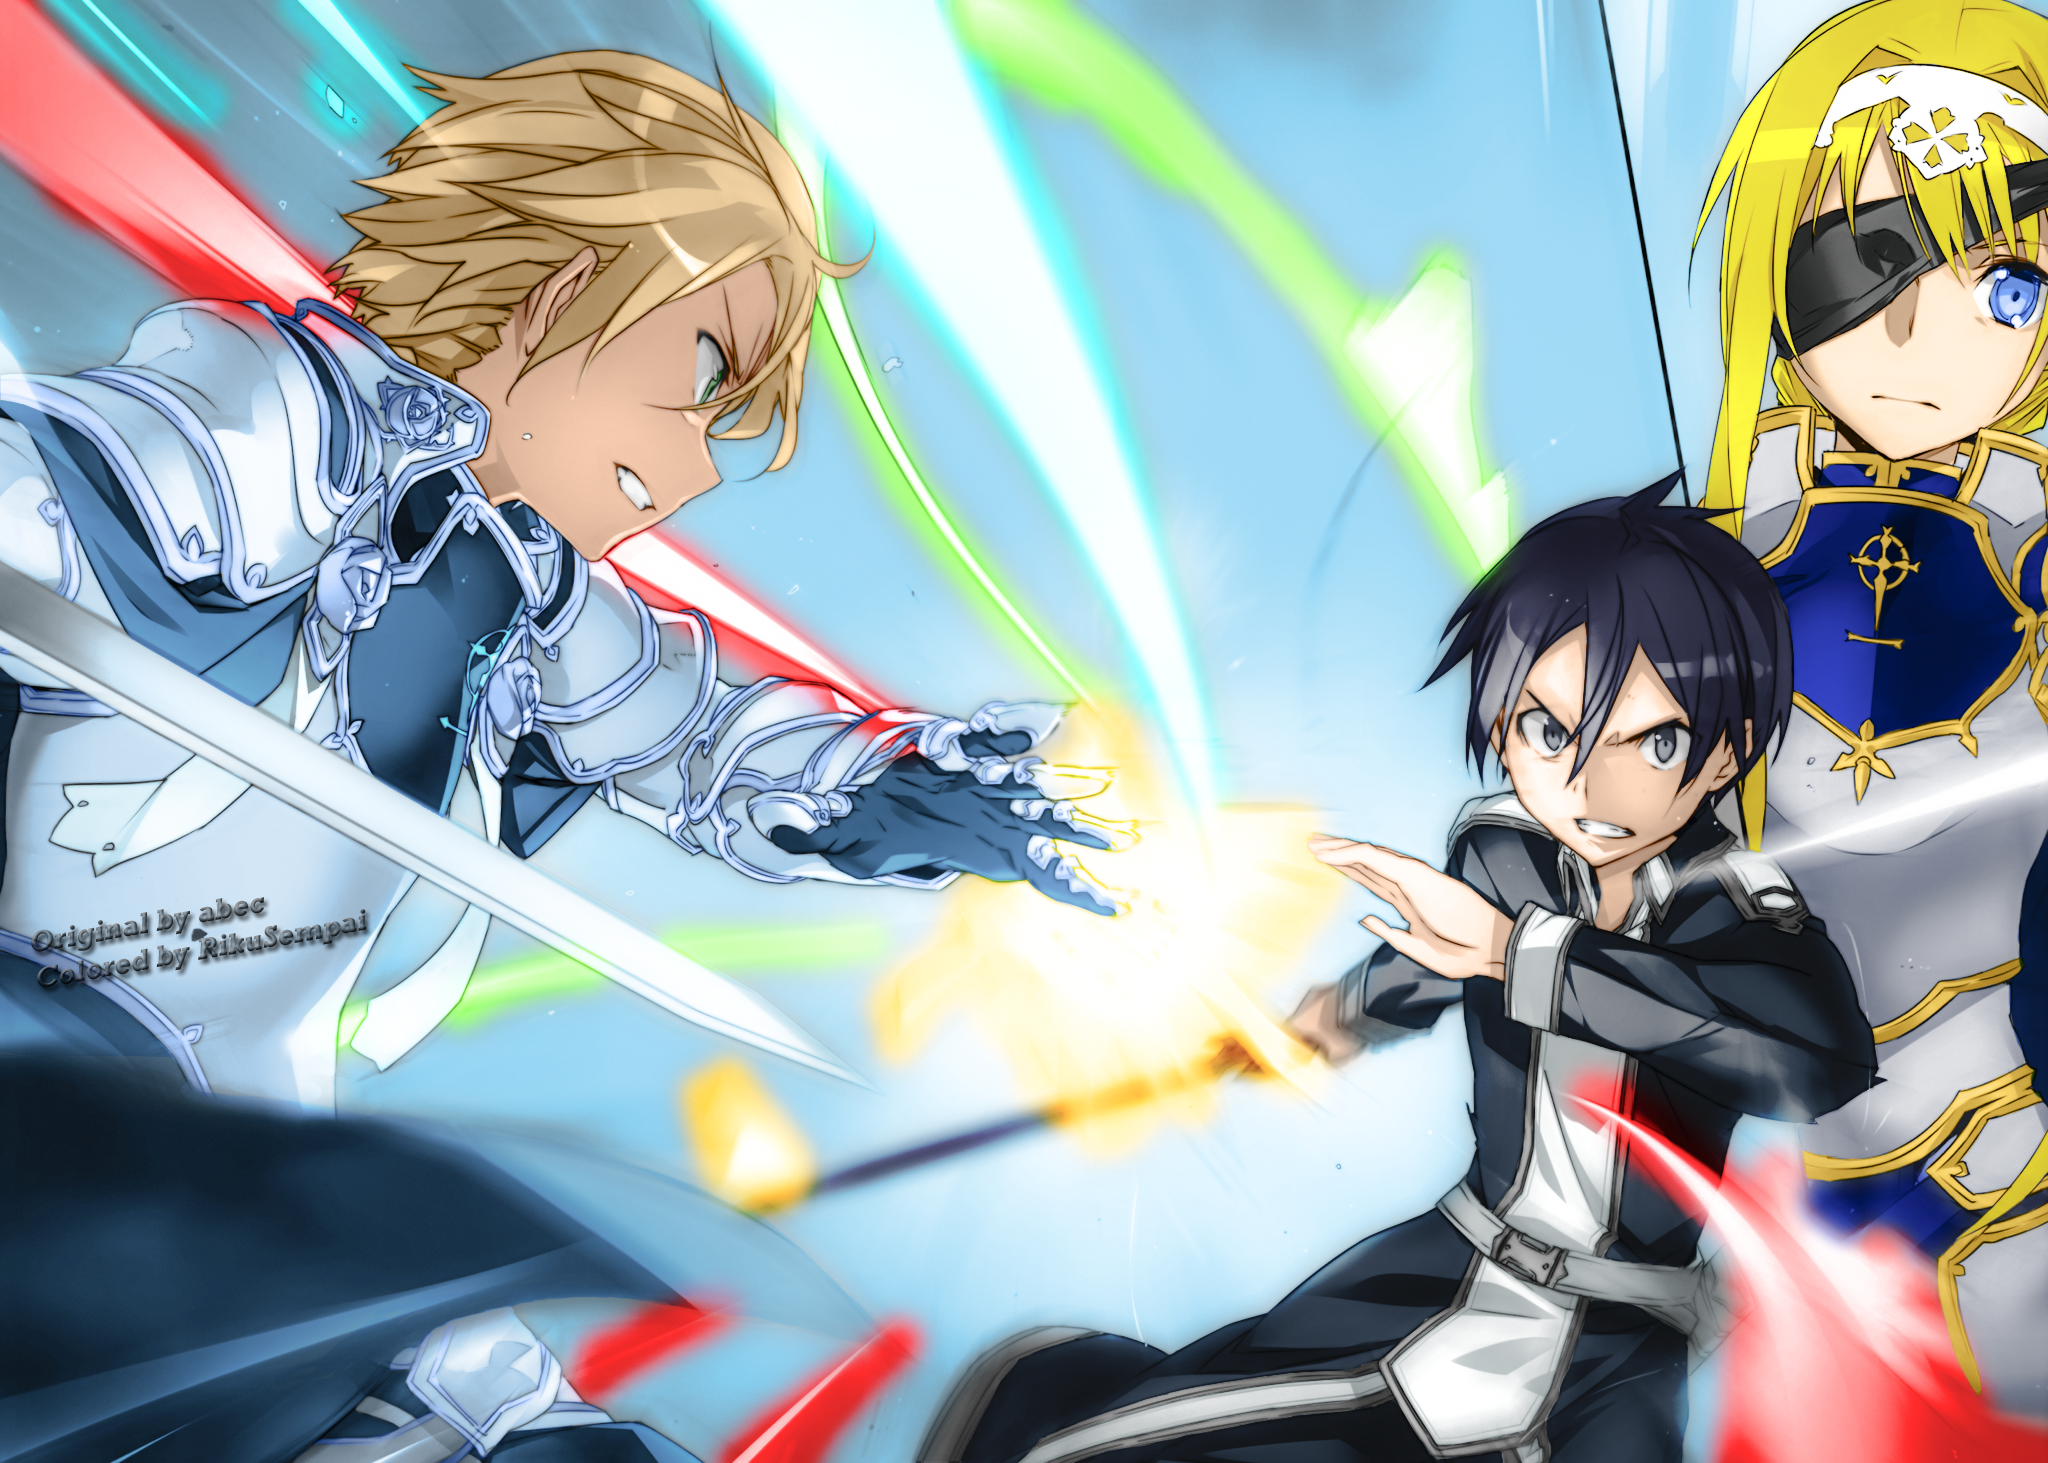 Anime Sword Art Online: Alicization HD Wallpaper